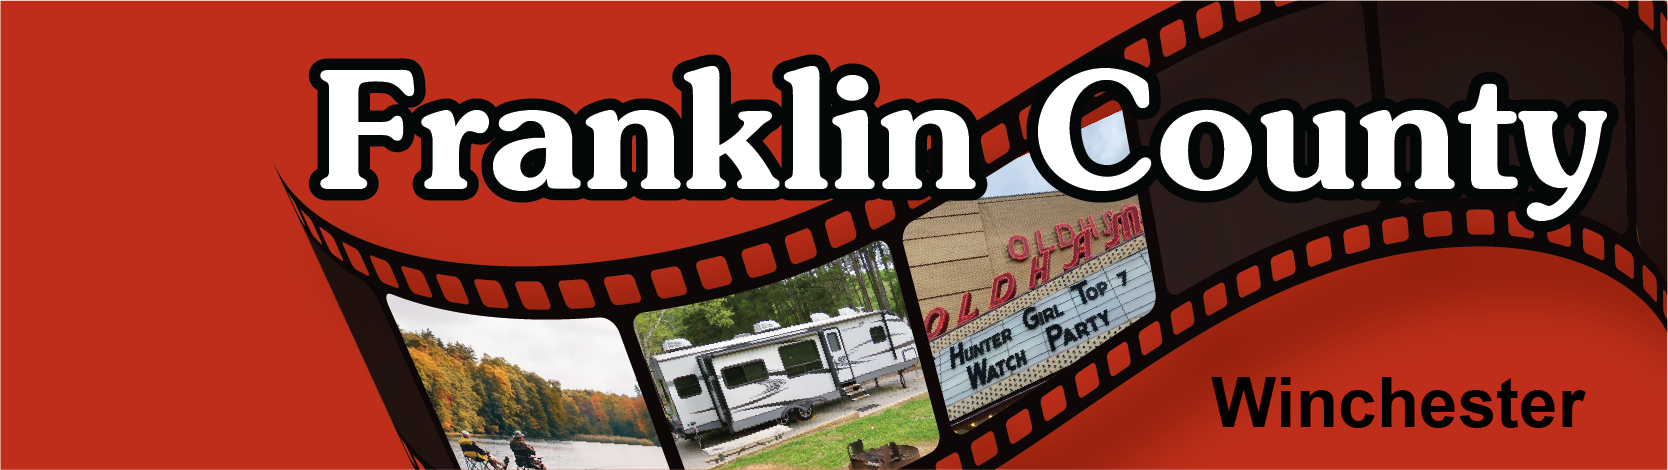 franklin county header